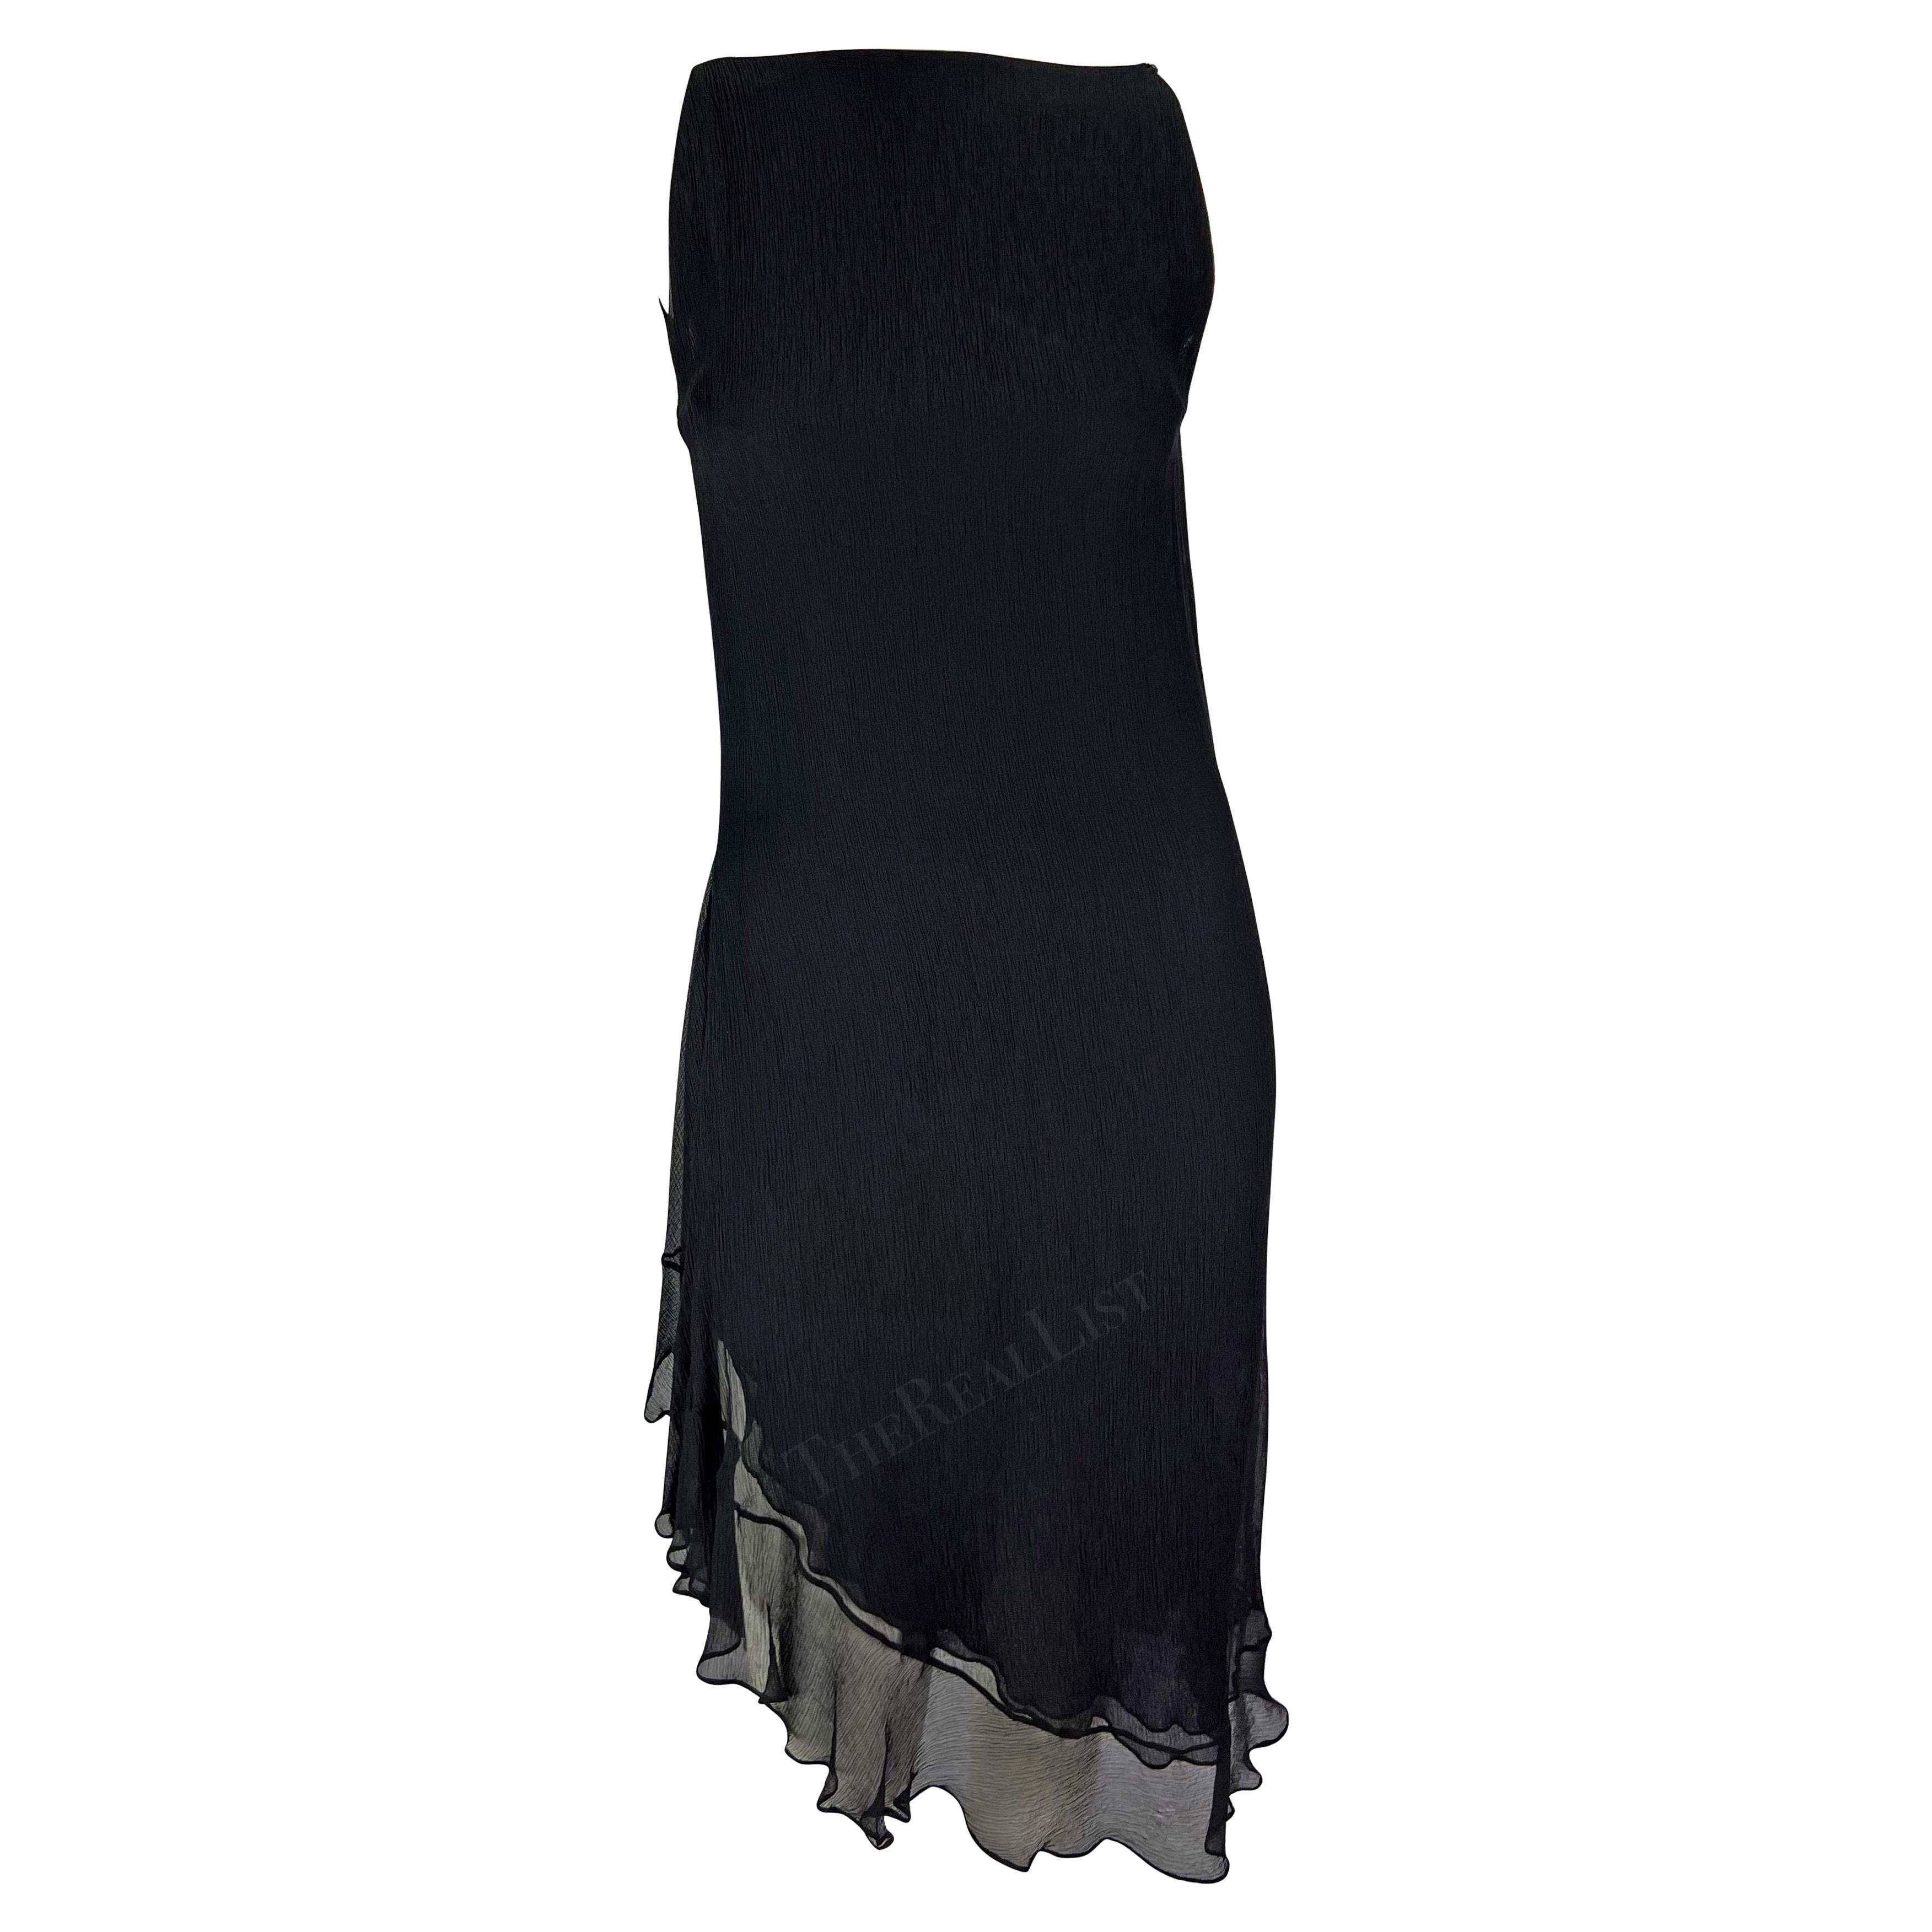 S/S 2000 Gucci by Tom Ford Black Crepe Silk Chiffon Ruffle Dress